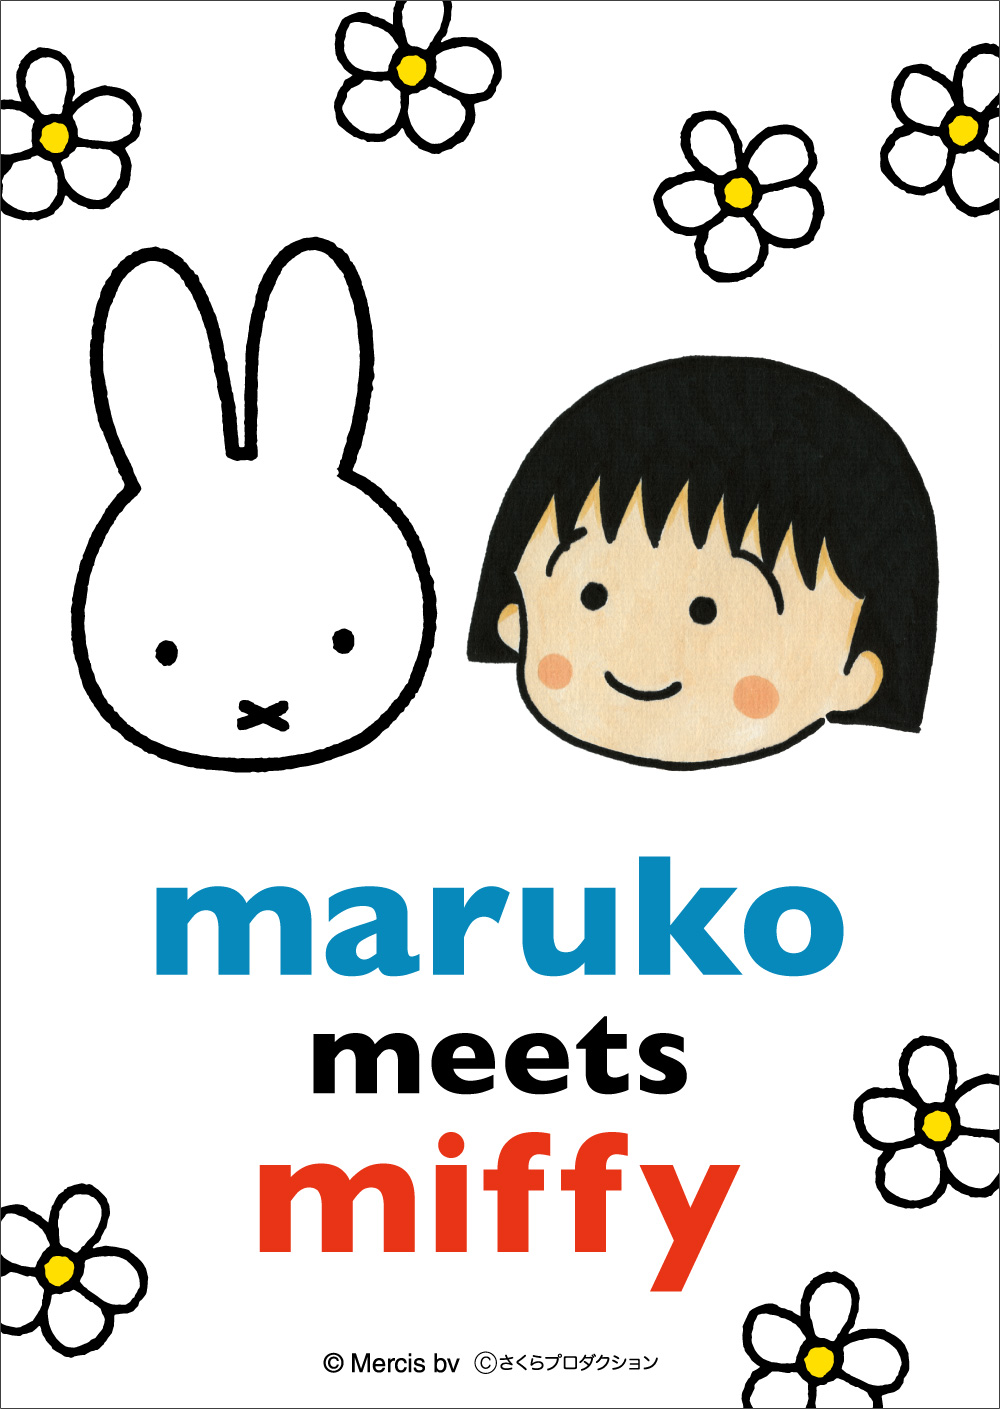 miffy style、キデイランドで 「maruko meets miffy」フェア開催｜トピックス｜dickbruna.jp 日本のミッフィー 情報サイト